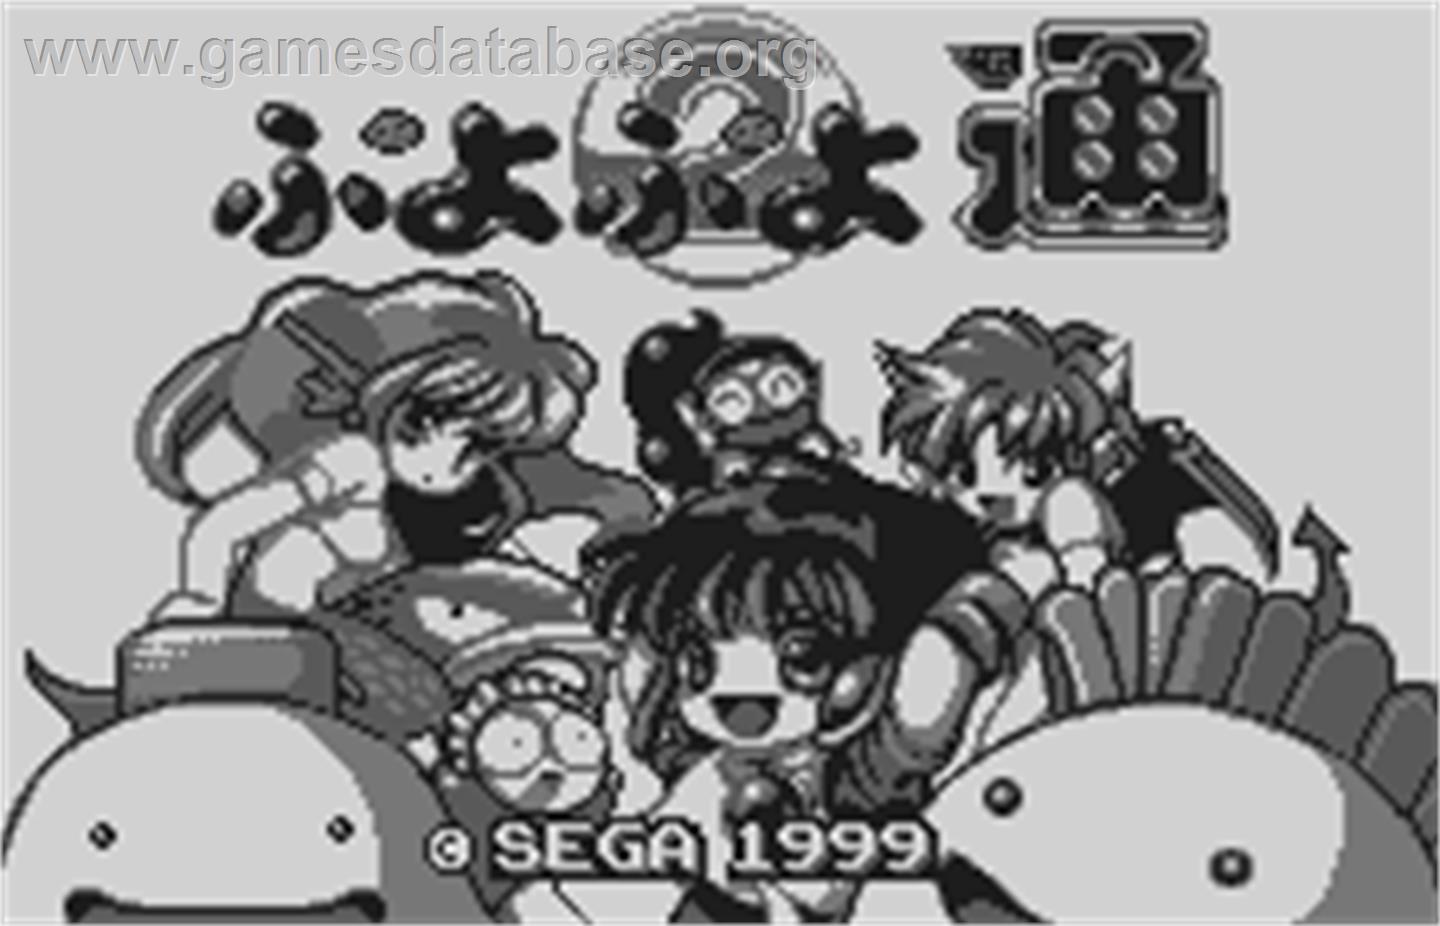 Puyo Puyo 2 - Bandai WonderSwan - Artwork - Title Screen